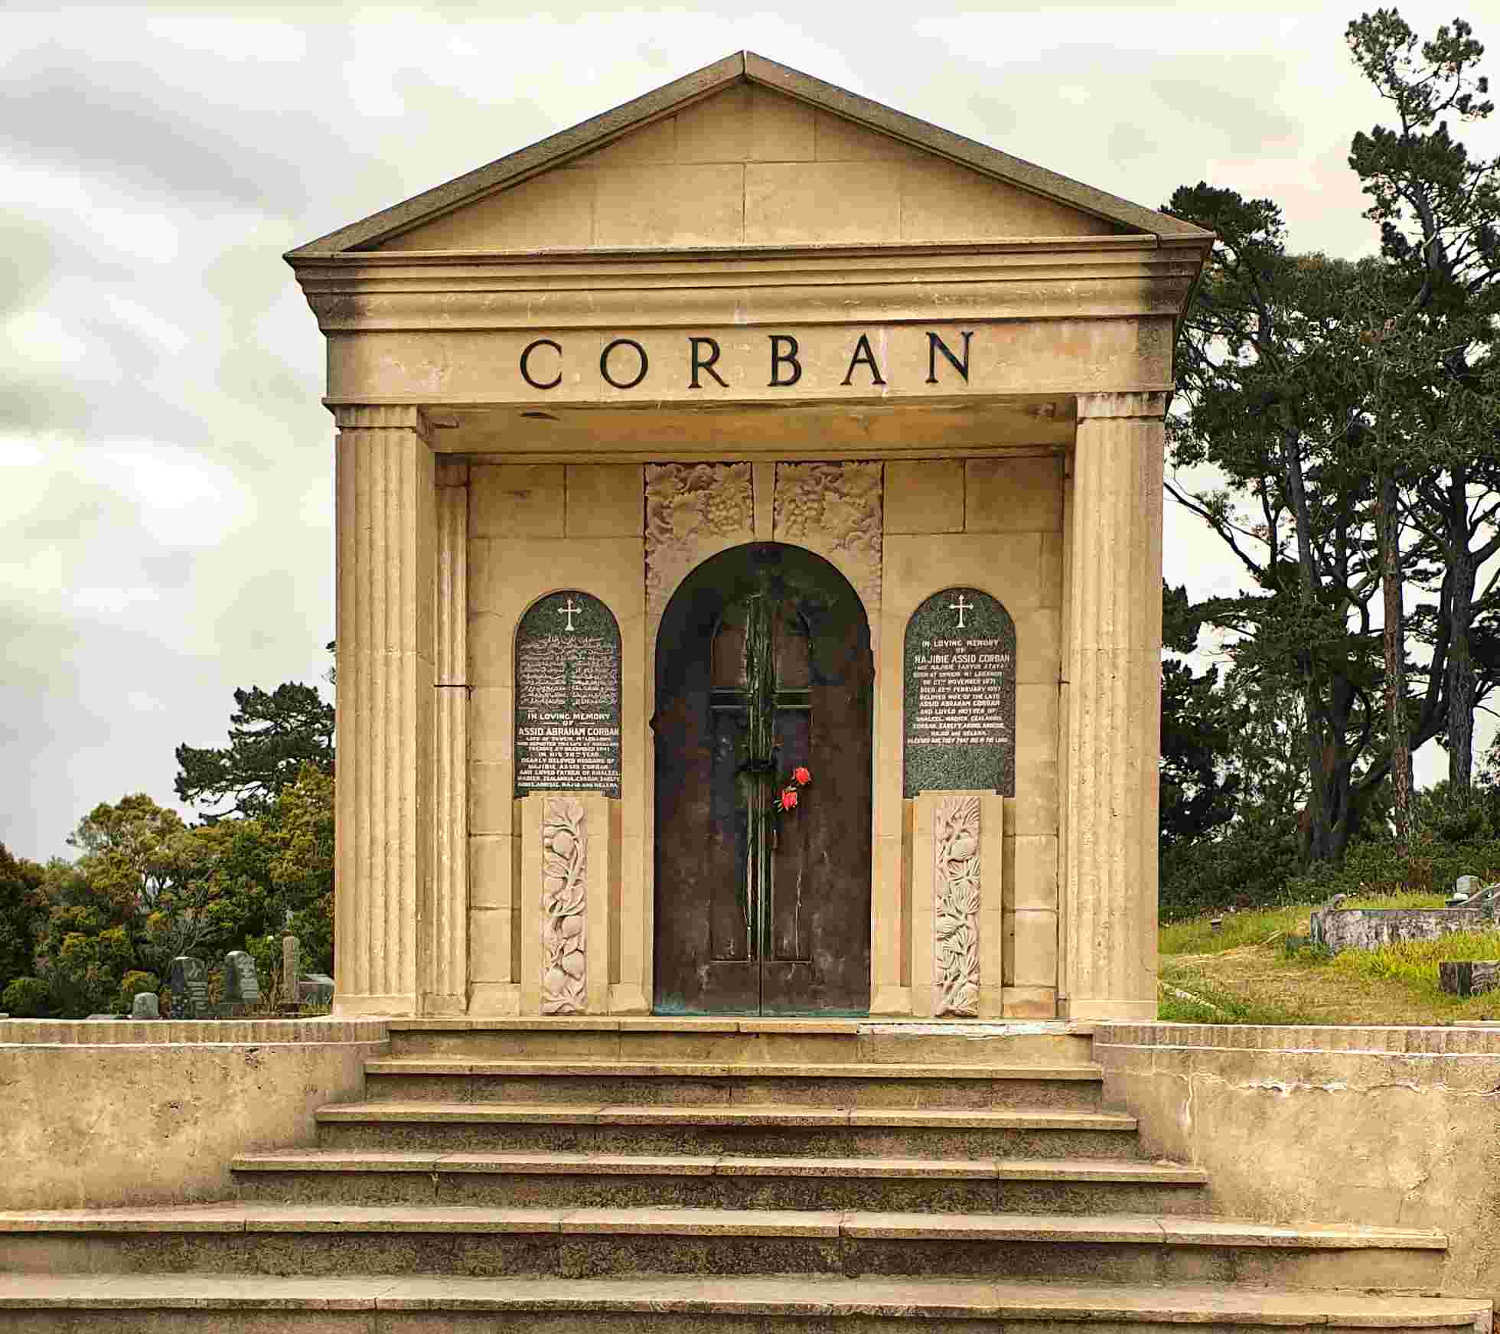 Corban family wine makers dynasty mausoleum, Waikumete cemetery, Auckland, New Zealand